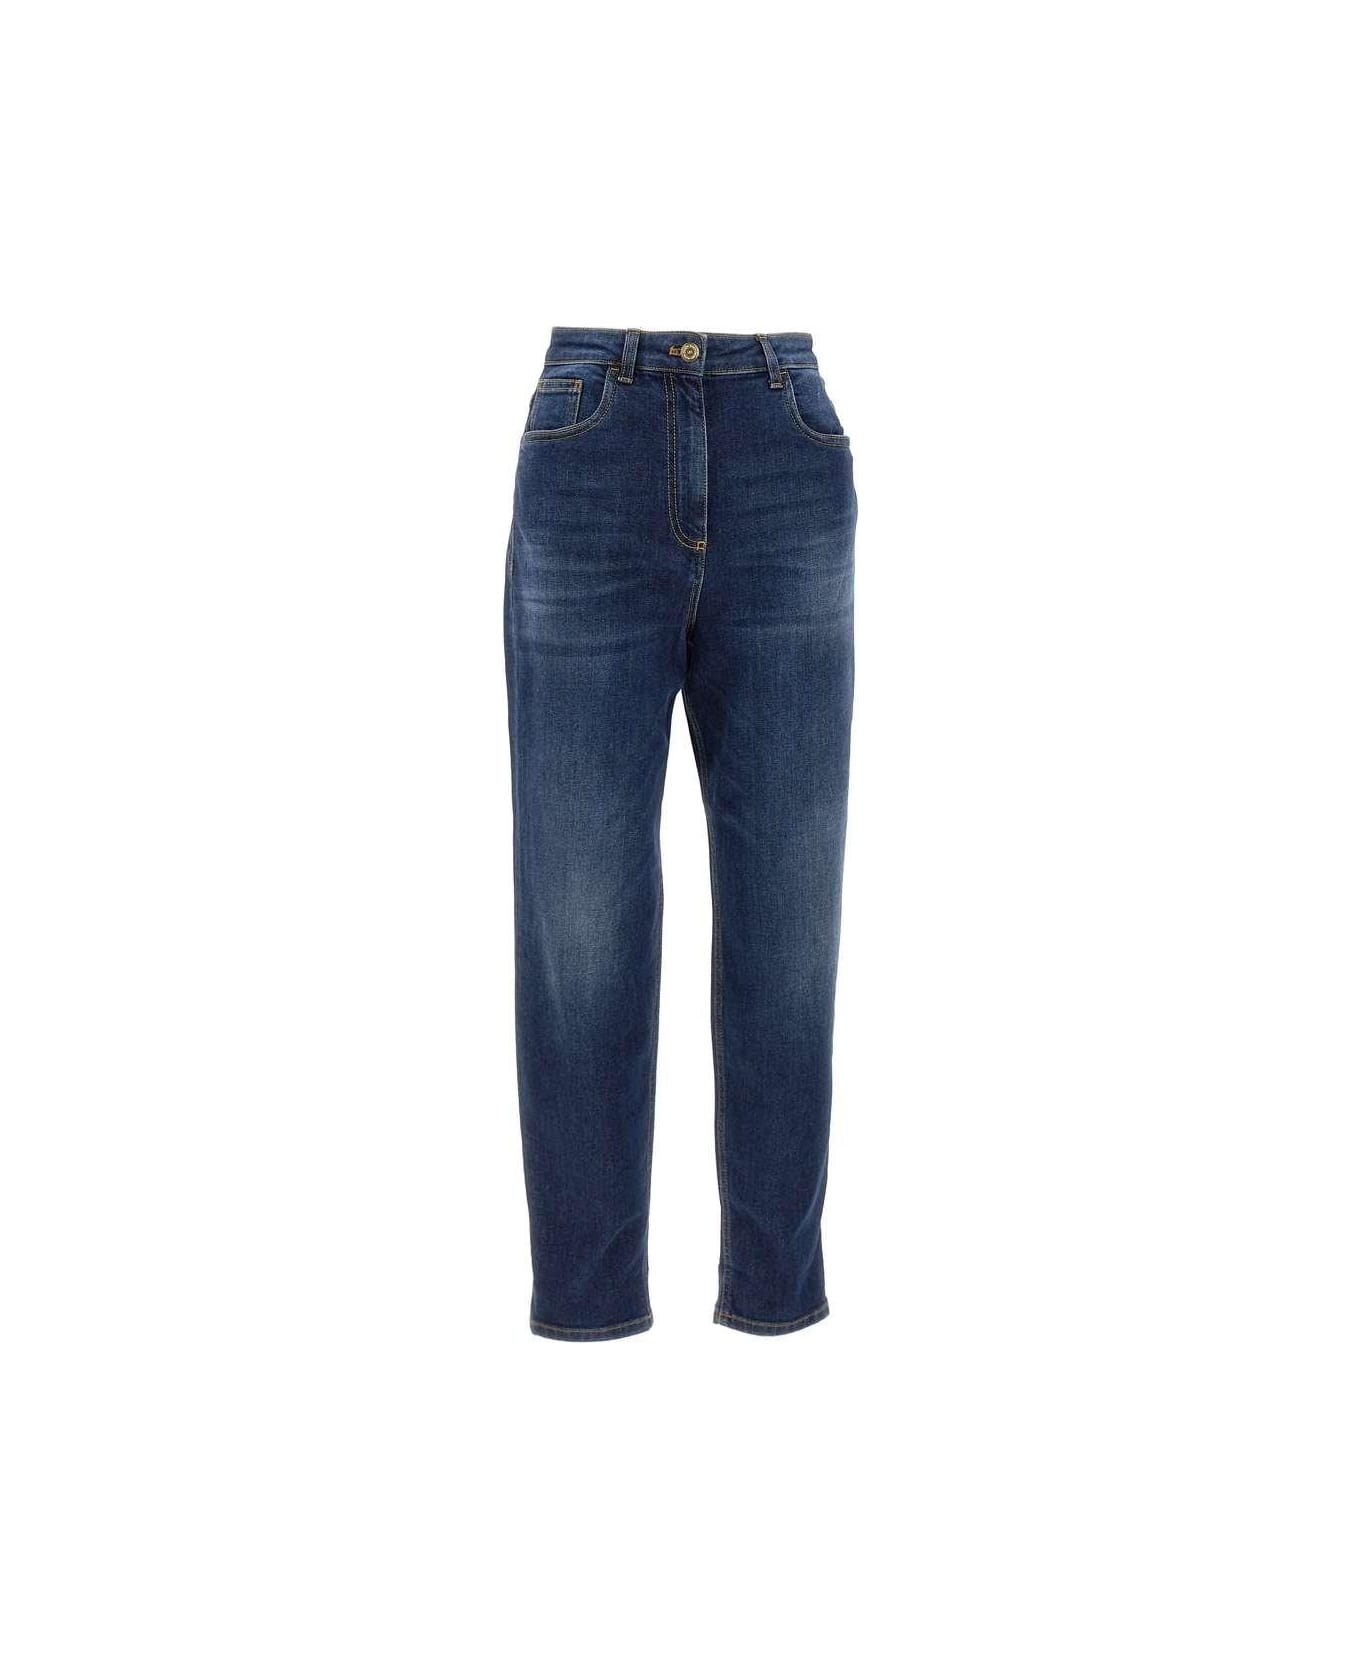 Elisabetta Franchi Straight Leg Jeans - Blu denim デニム